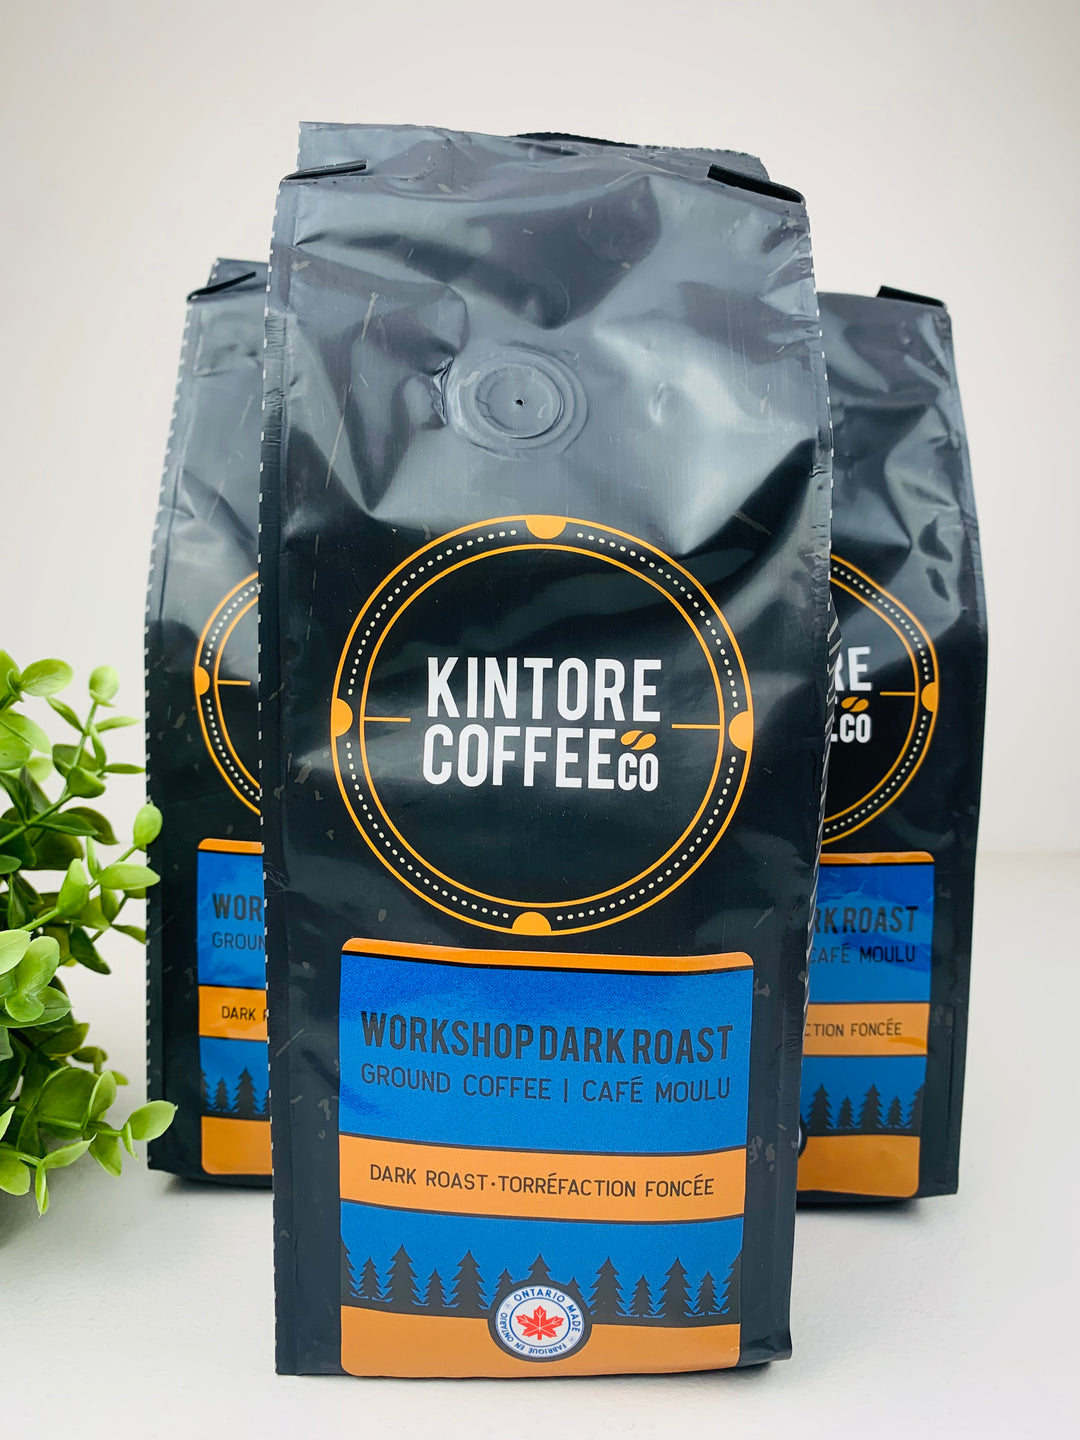 Kintore Coffee Co, Workshop Dark Roast